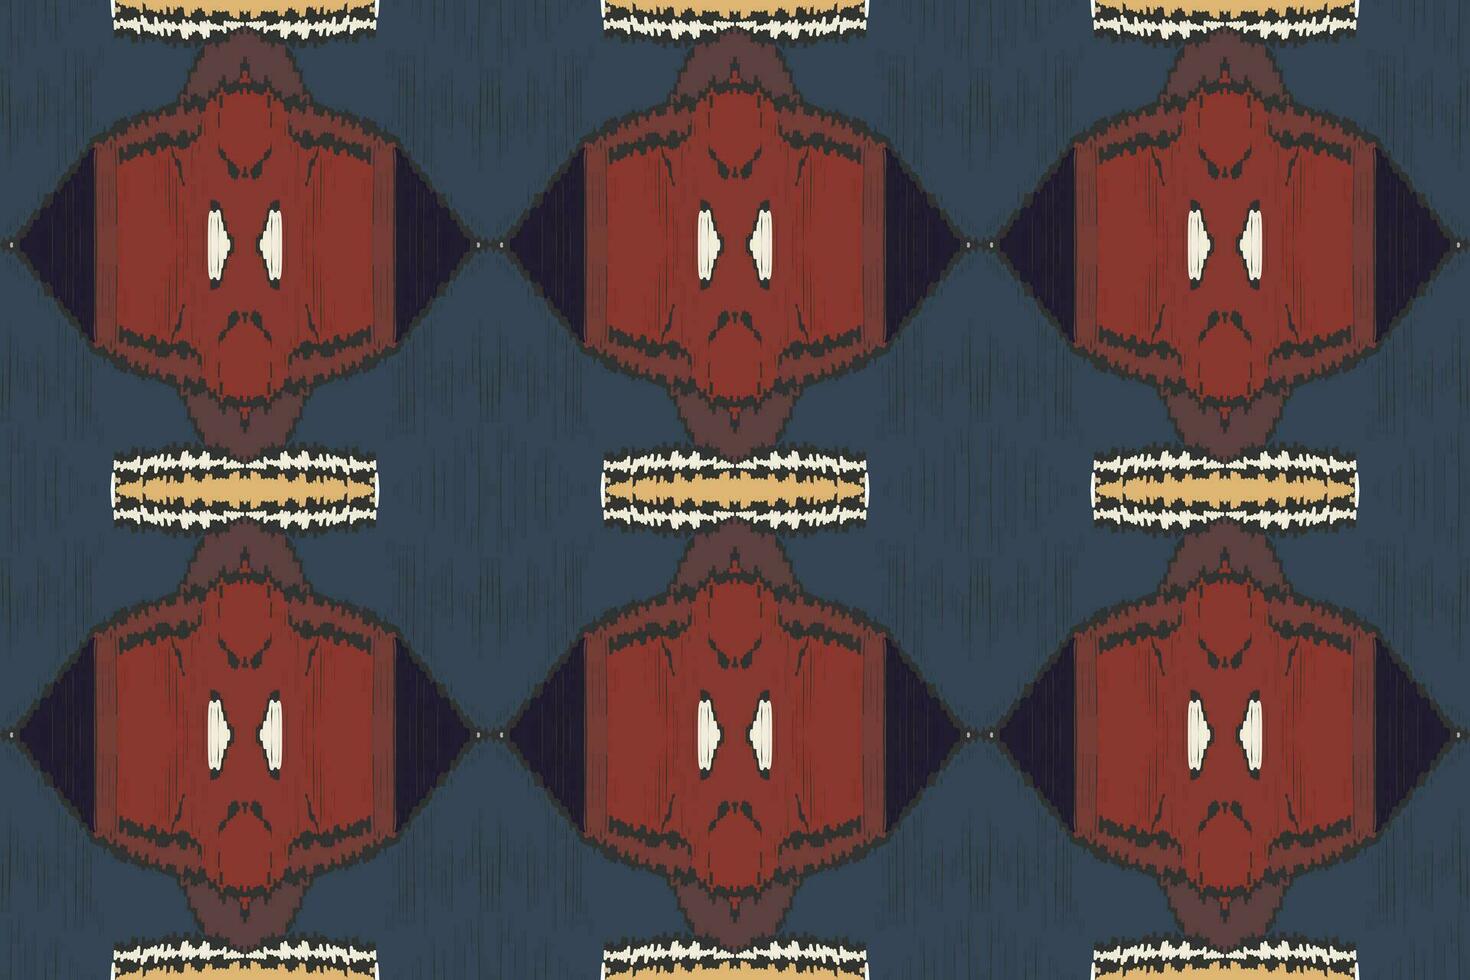 motivo ikat floral cachemir bordado antecedentes. ikat diseños geométrico étnico oriental modelo tradicional. ikat azteca estilo resumen diseño para impresión textura,tela,sari,sari,alfombra. vector